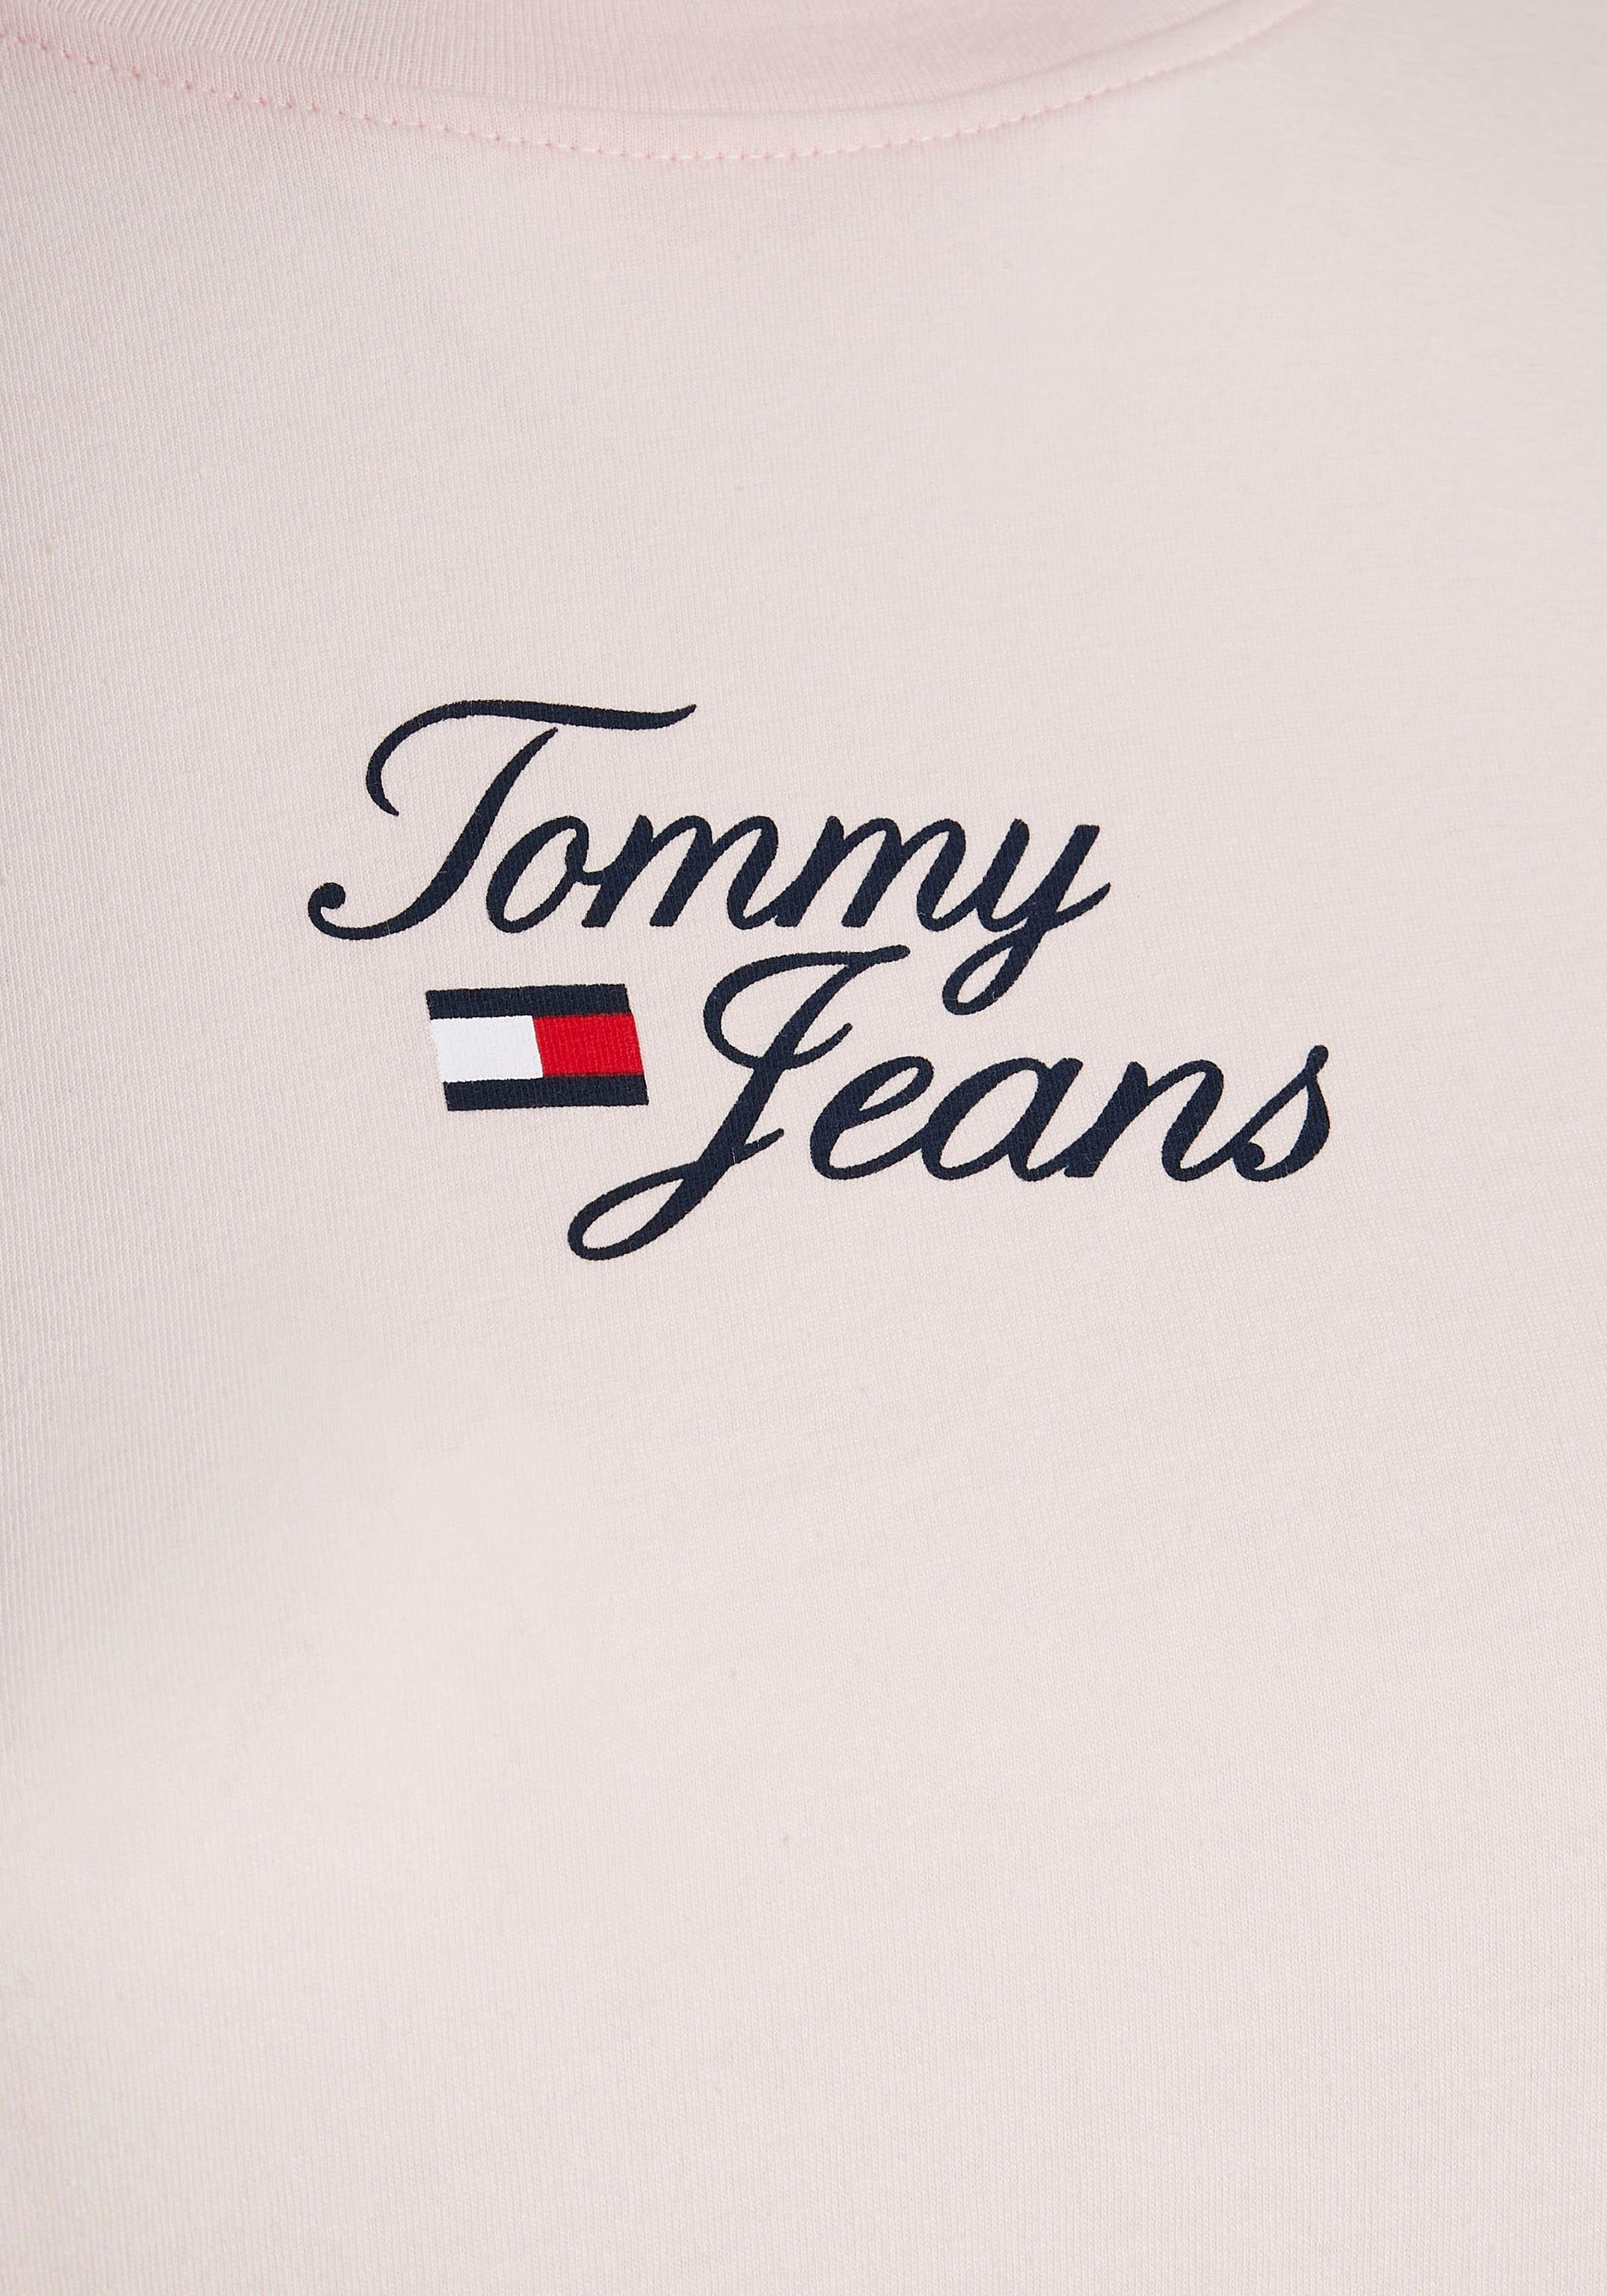 Tommy Jeans Curve T-Shirt TJW CRV REG ESSENTIAL LOGO 1 SS PLUS SIZE CURVE,mit  Tommy Jeans Schriftzug